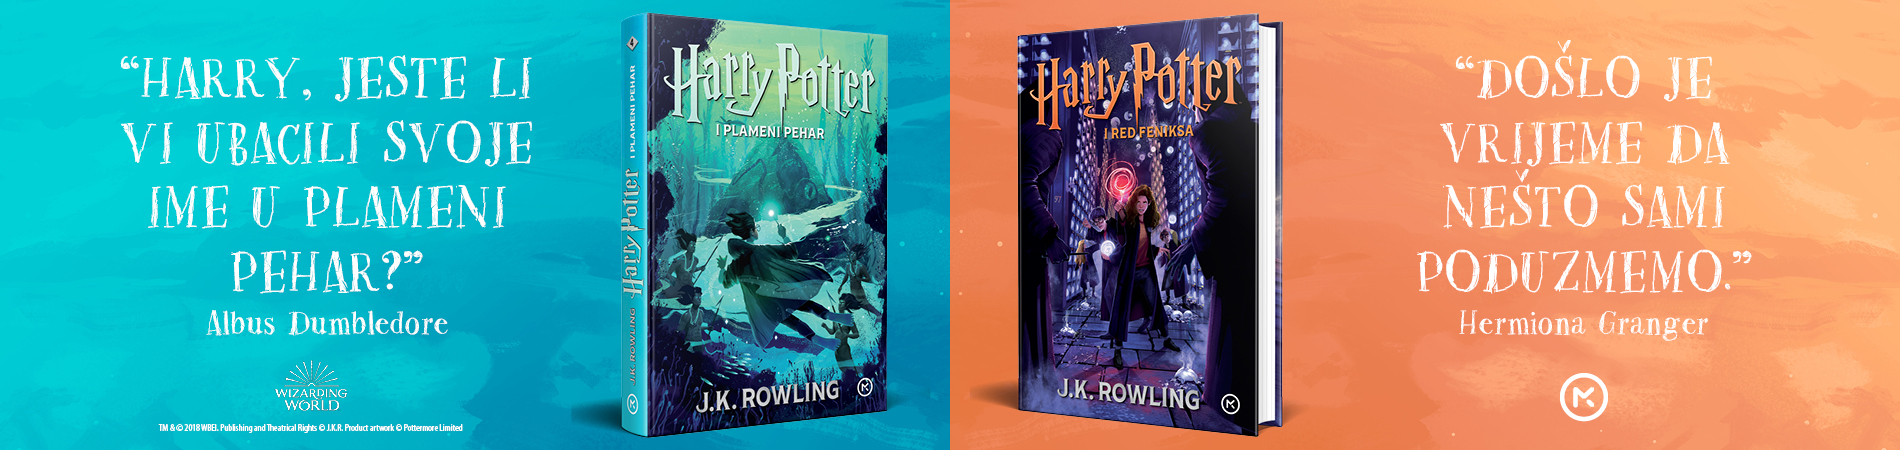 Harry Potter knjige 4 i 5